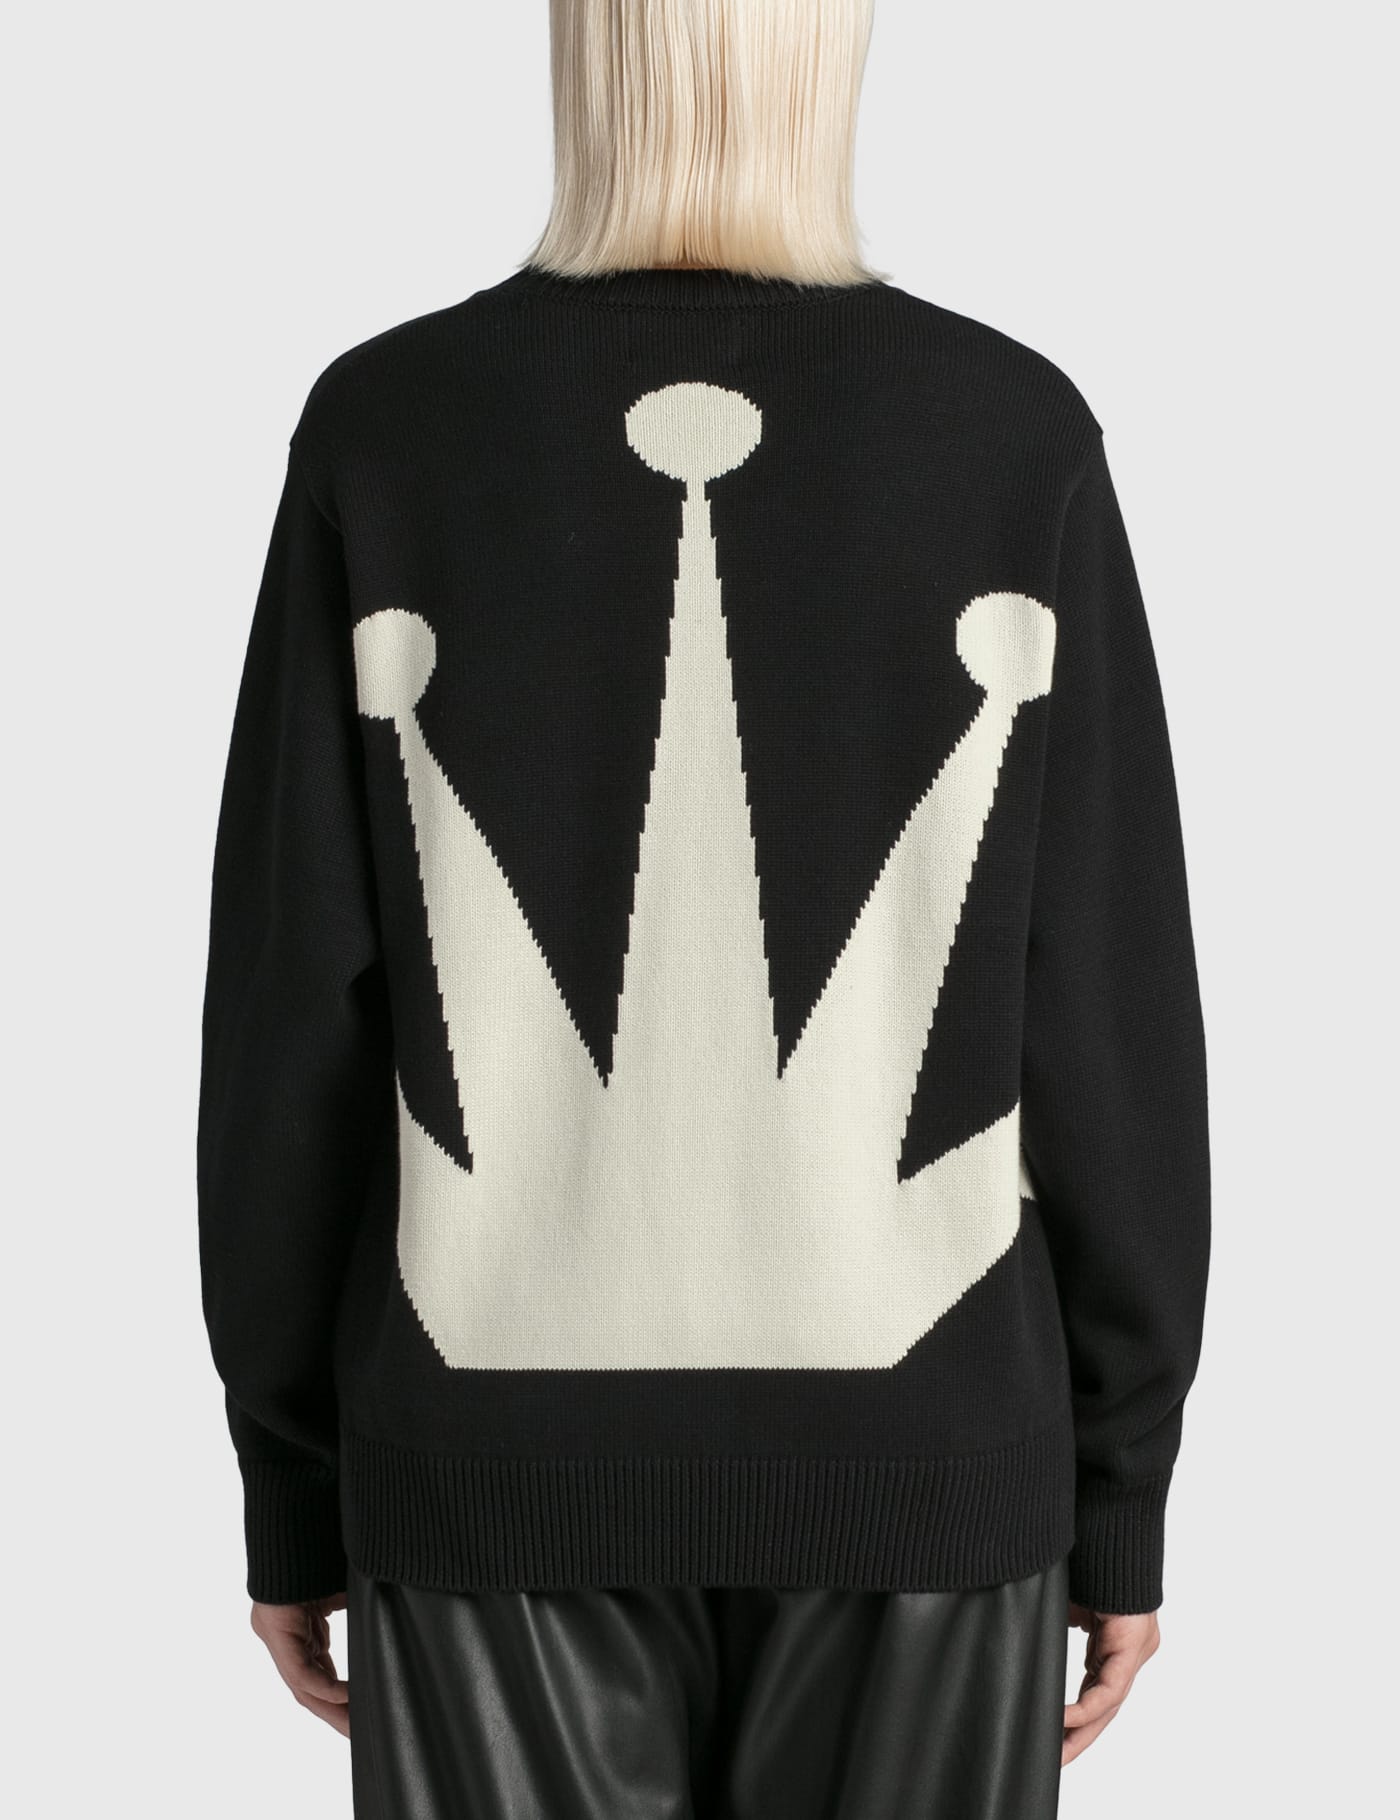 Stussy - Bent Crown Sweater | HBX - HYPEBEAST 為您搜羅全球潮流時尚品牌